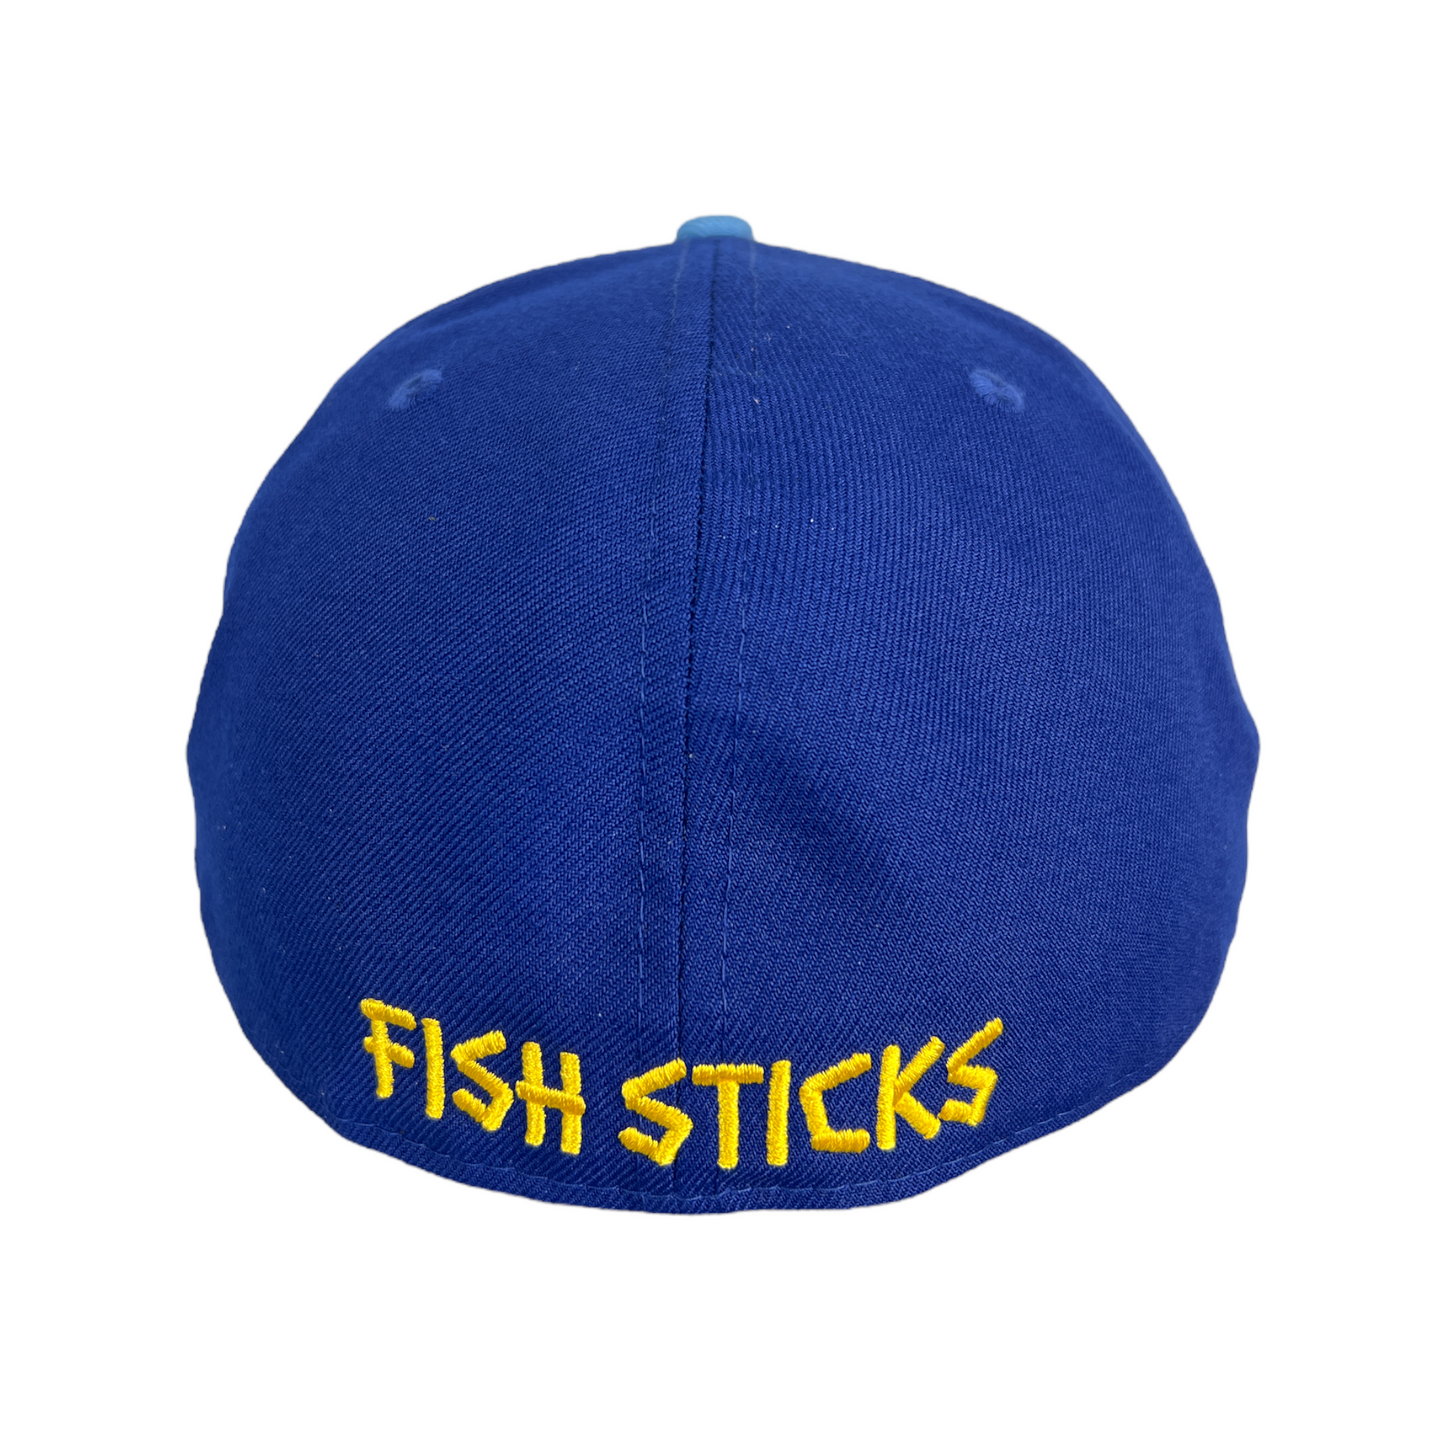 New Era 59FIFTY Fish Sticks Alternate Hat